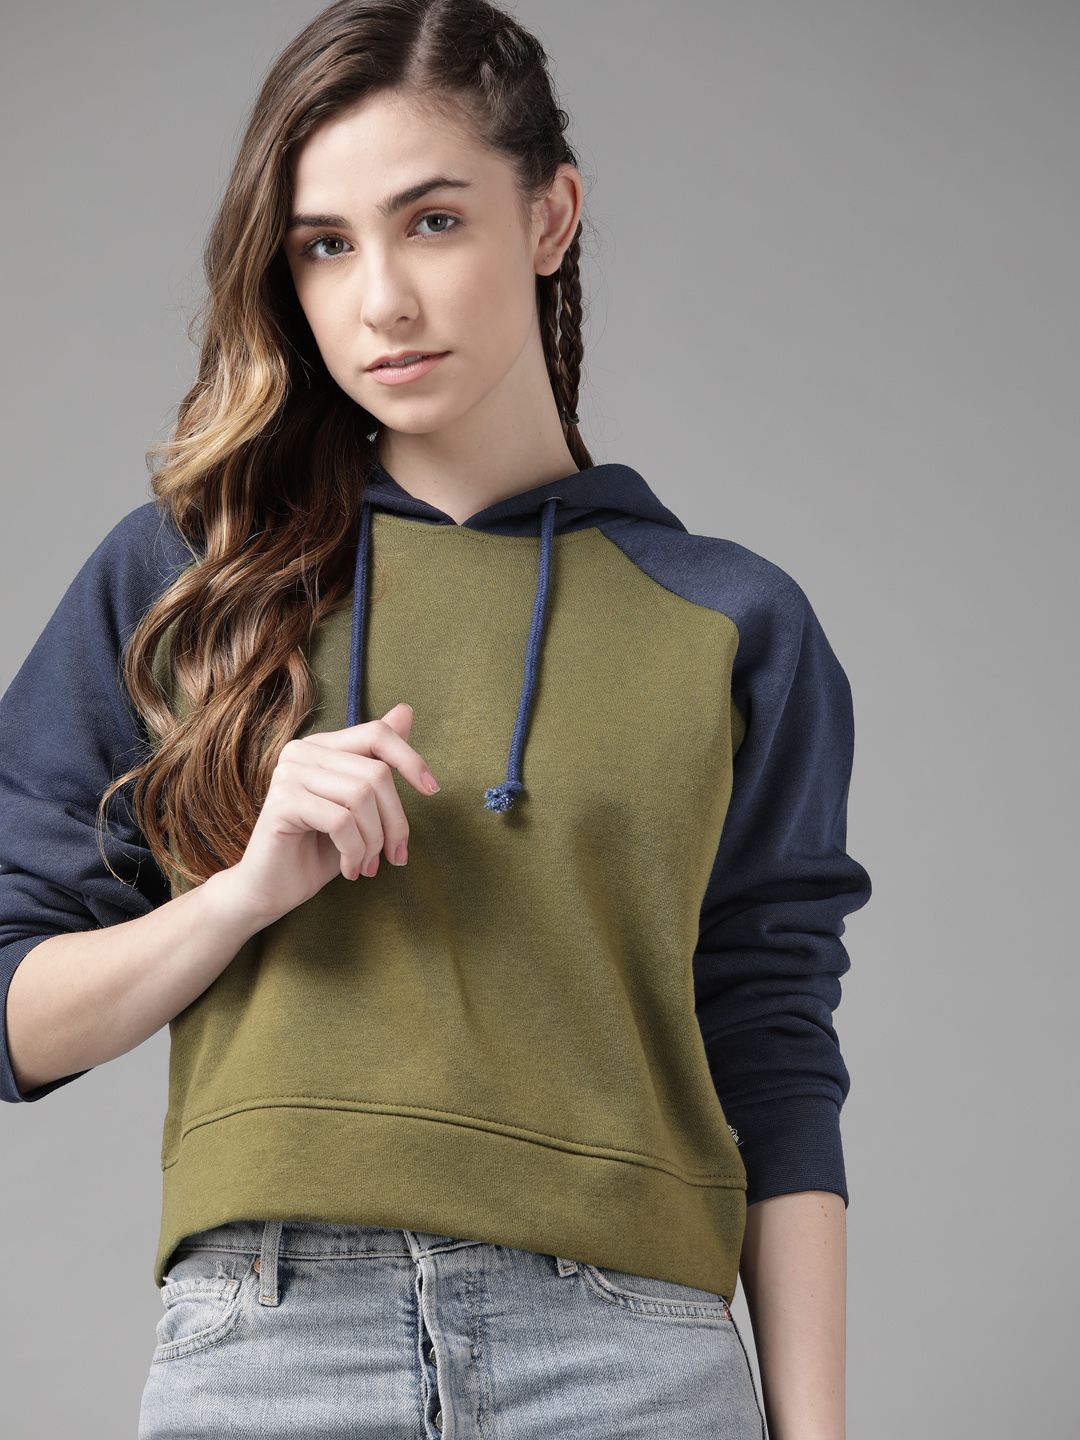 Roadster Women Olive Green & Navy Blue Colourblocked Hooded Sweatshirt Price in India